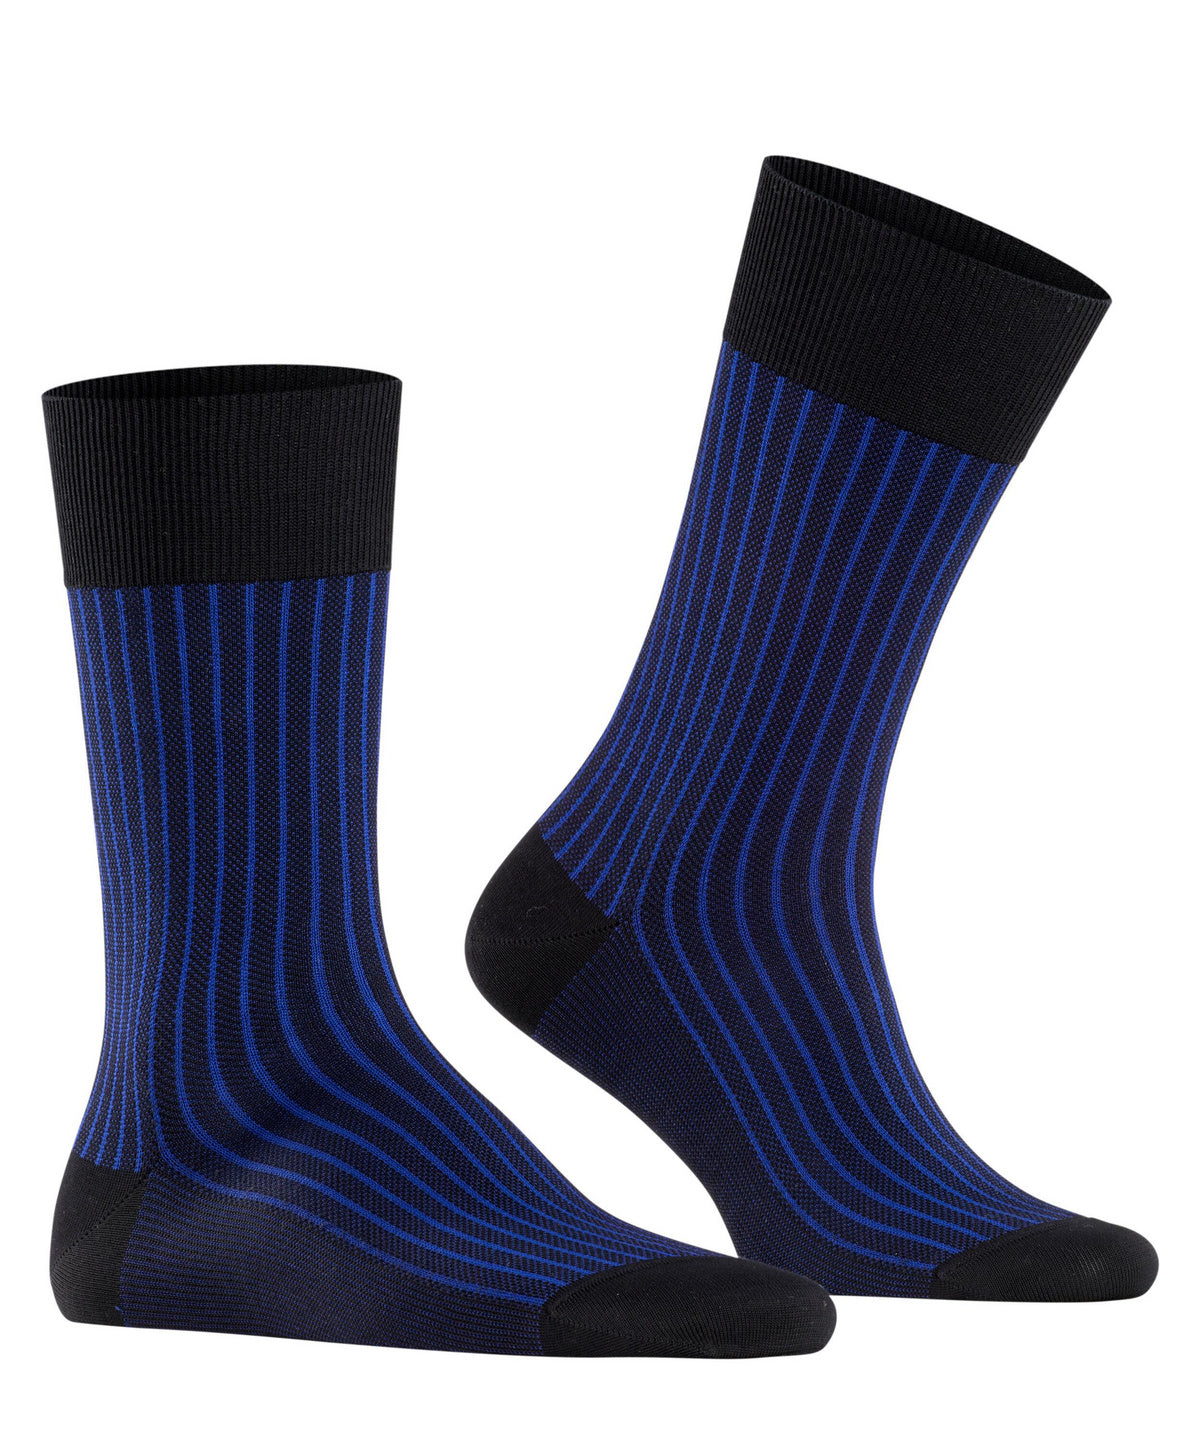 Blue and black striped socks Falke